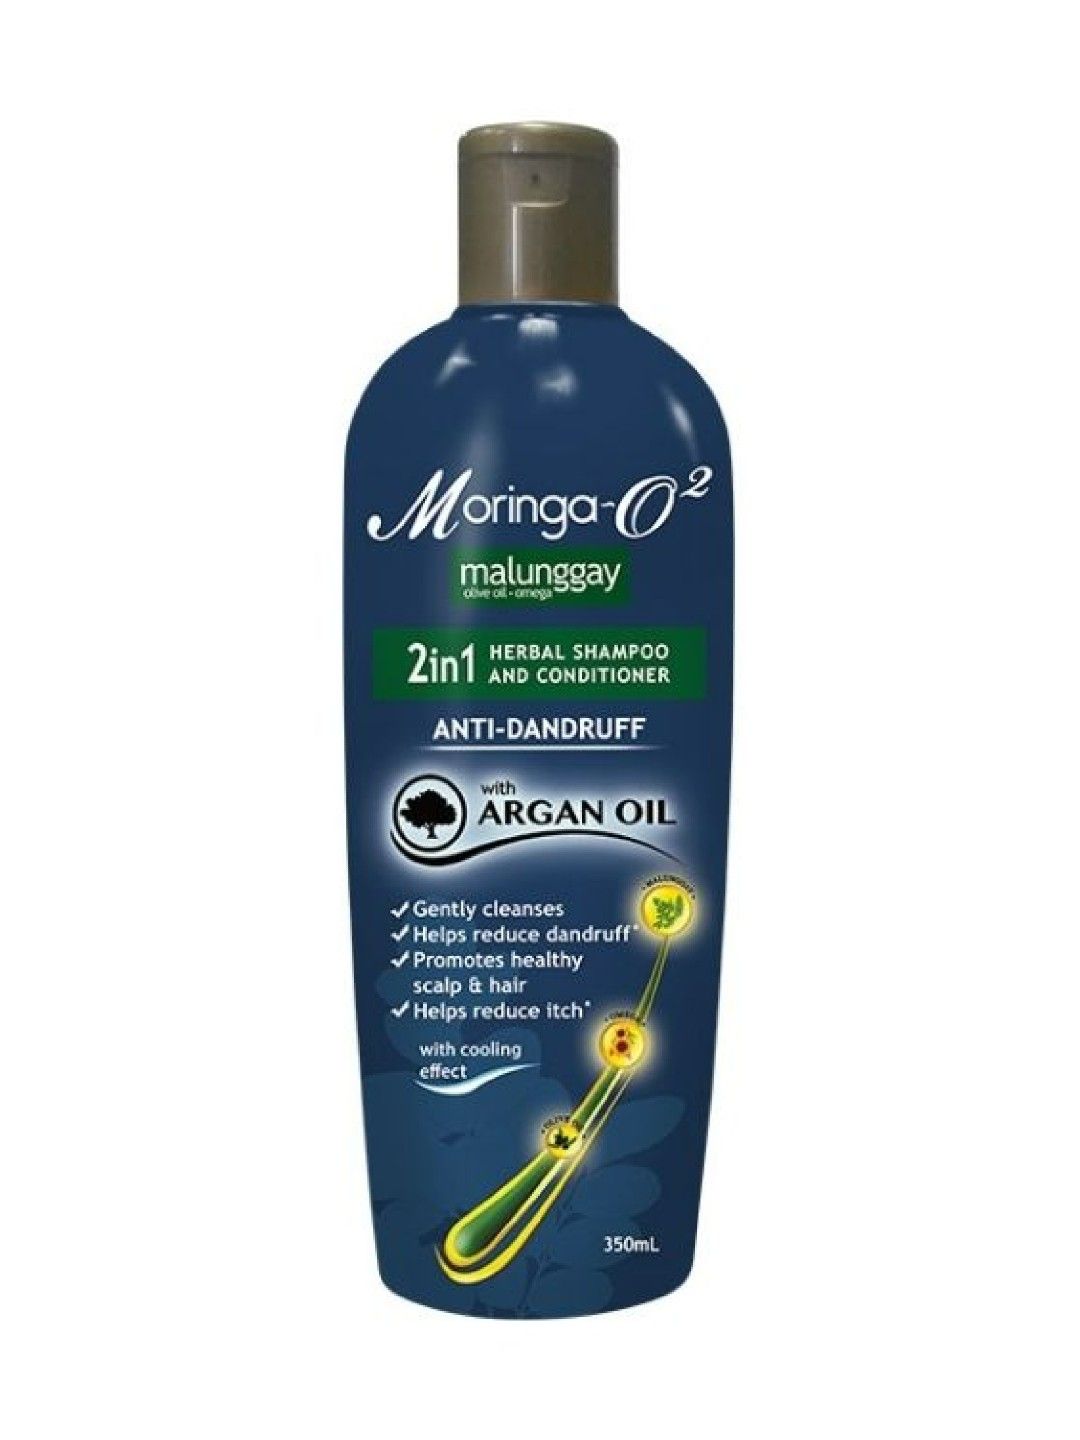 Moringa-O2 Anti-Dandruff 2-in-1 Shampoo & Conditioner with Argan Oil (350ml)